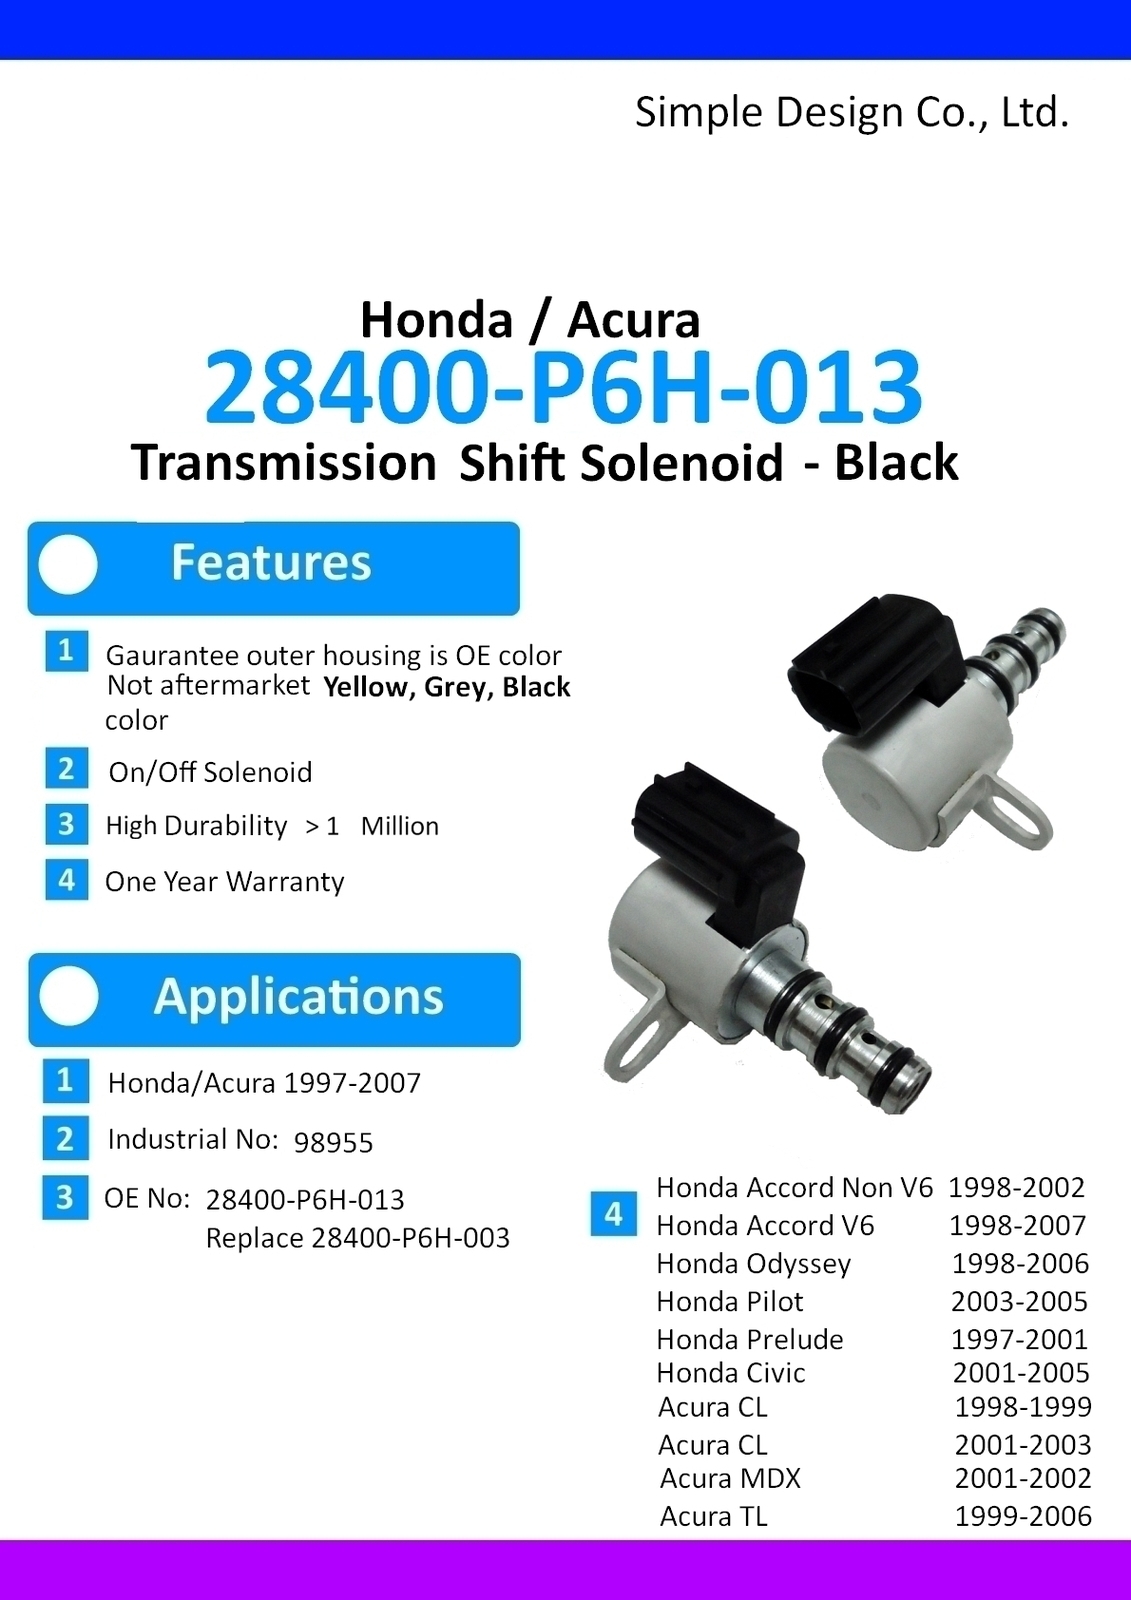 SINS Transmission Solenoid Kit 28250-P6H-024 and 50 similar items